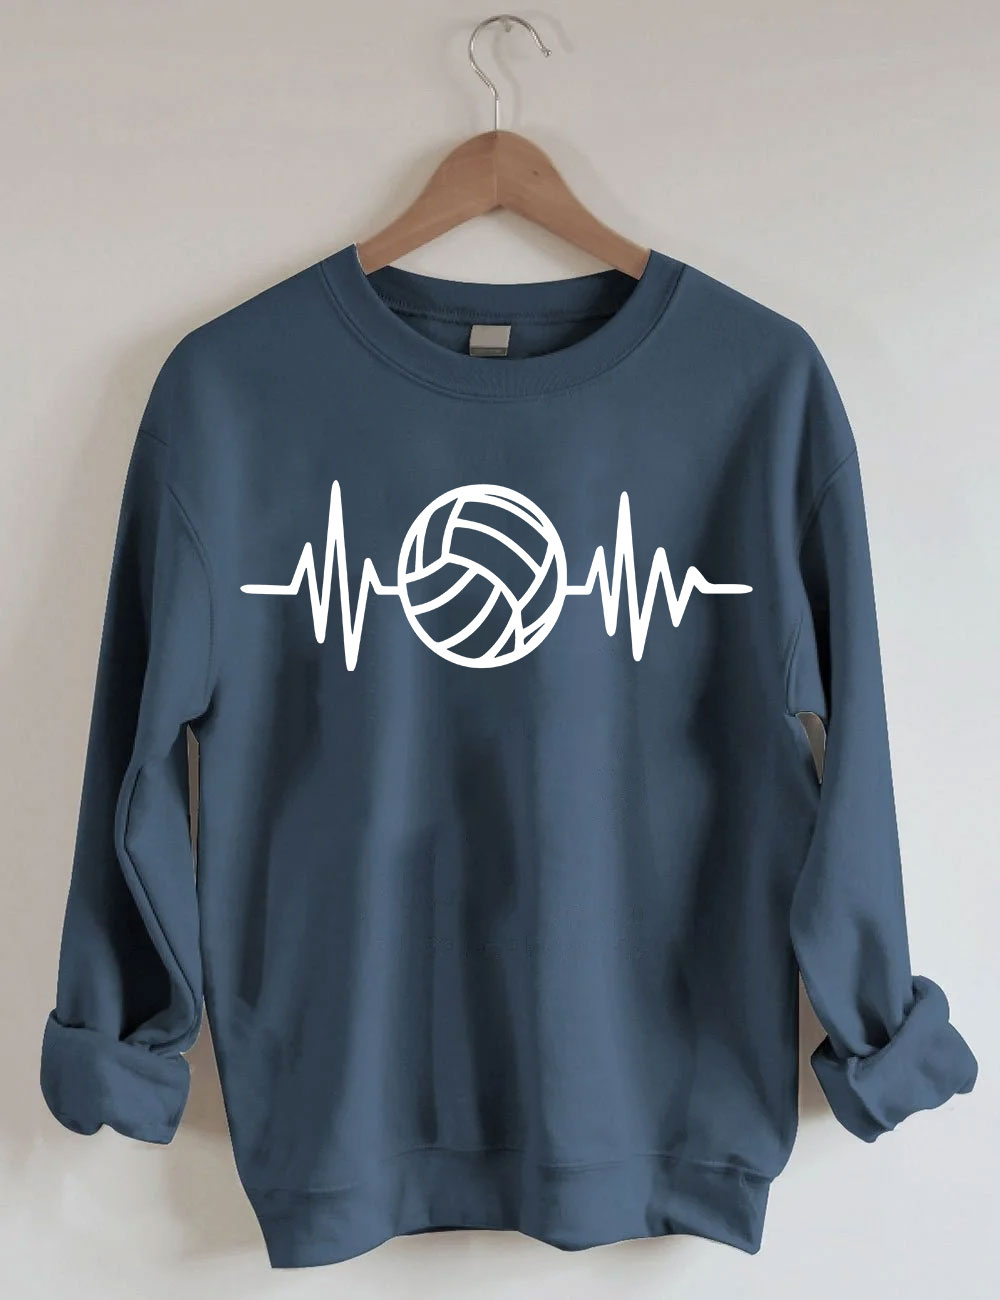 Volleyball Sweatshirt